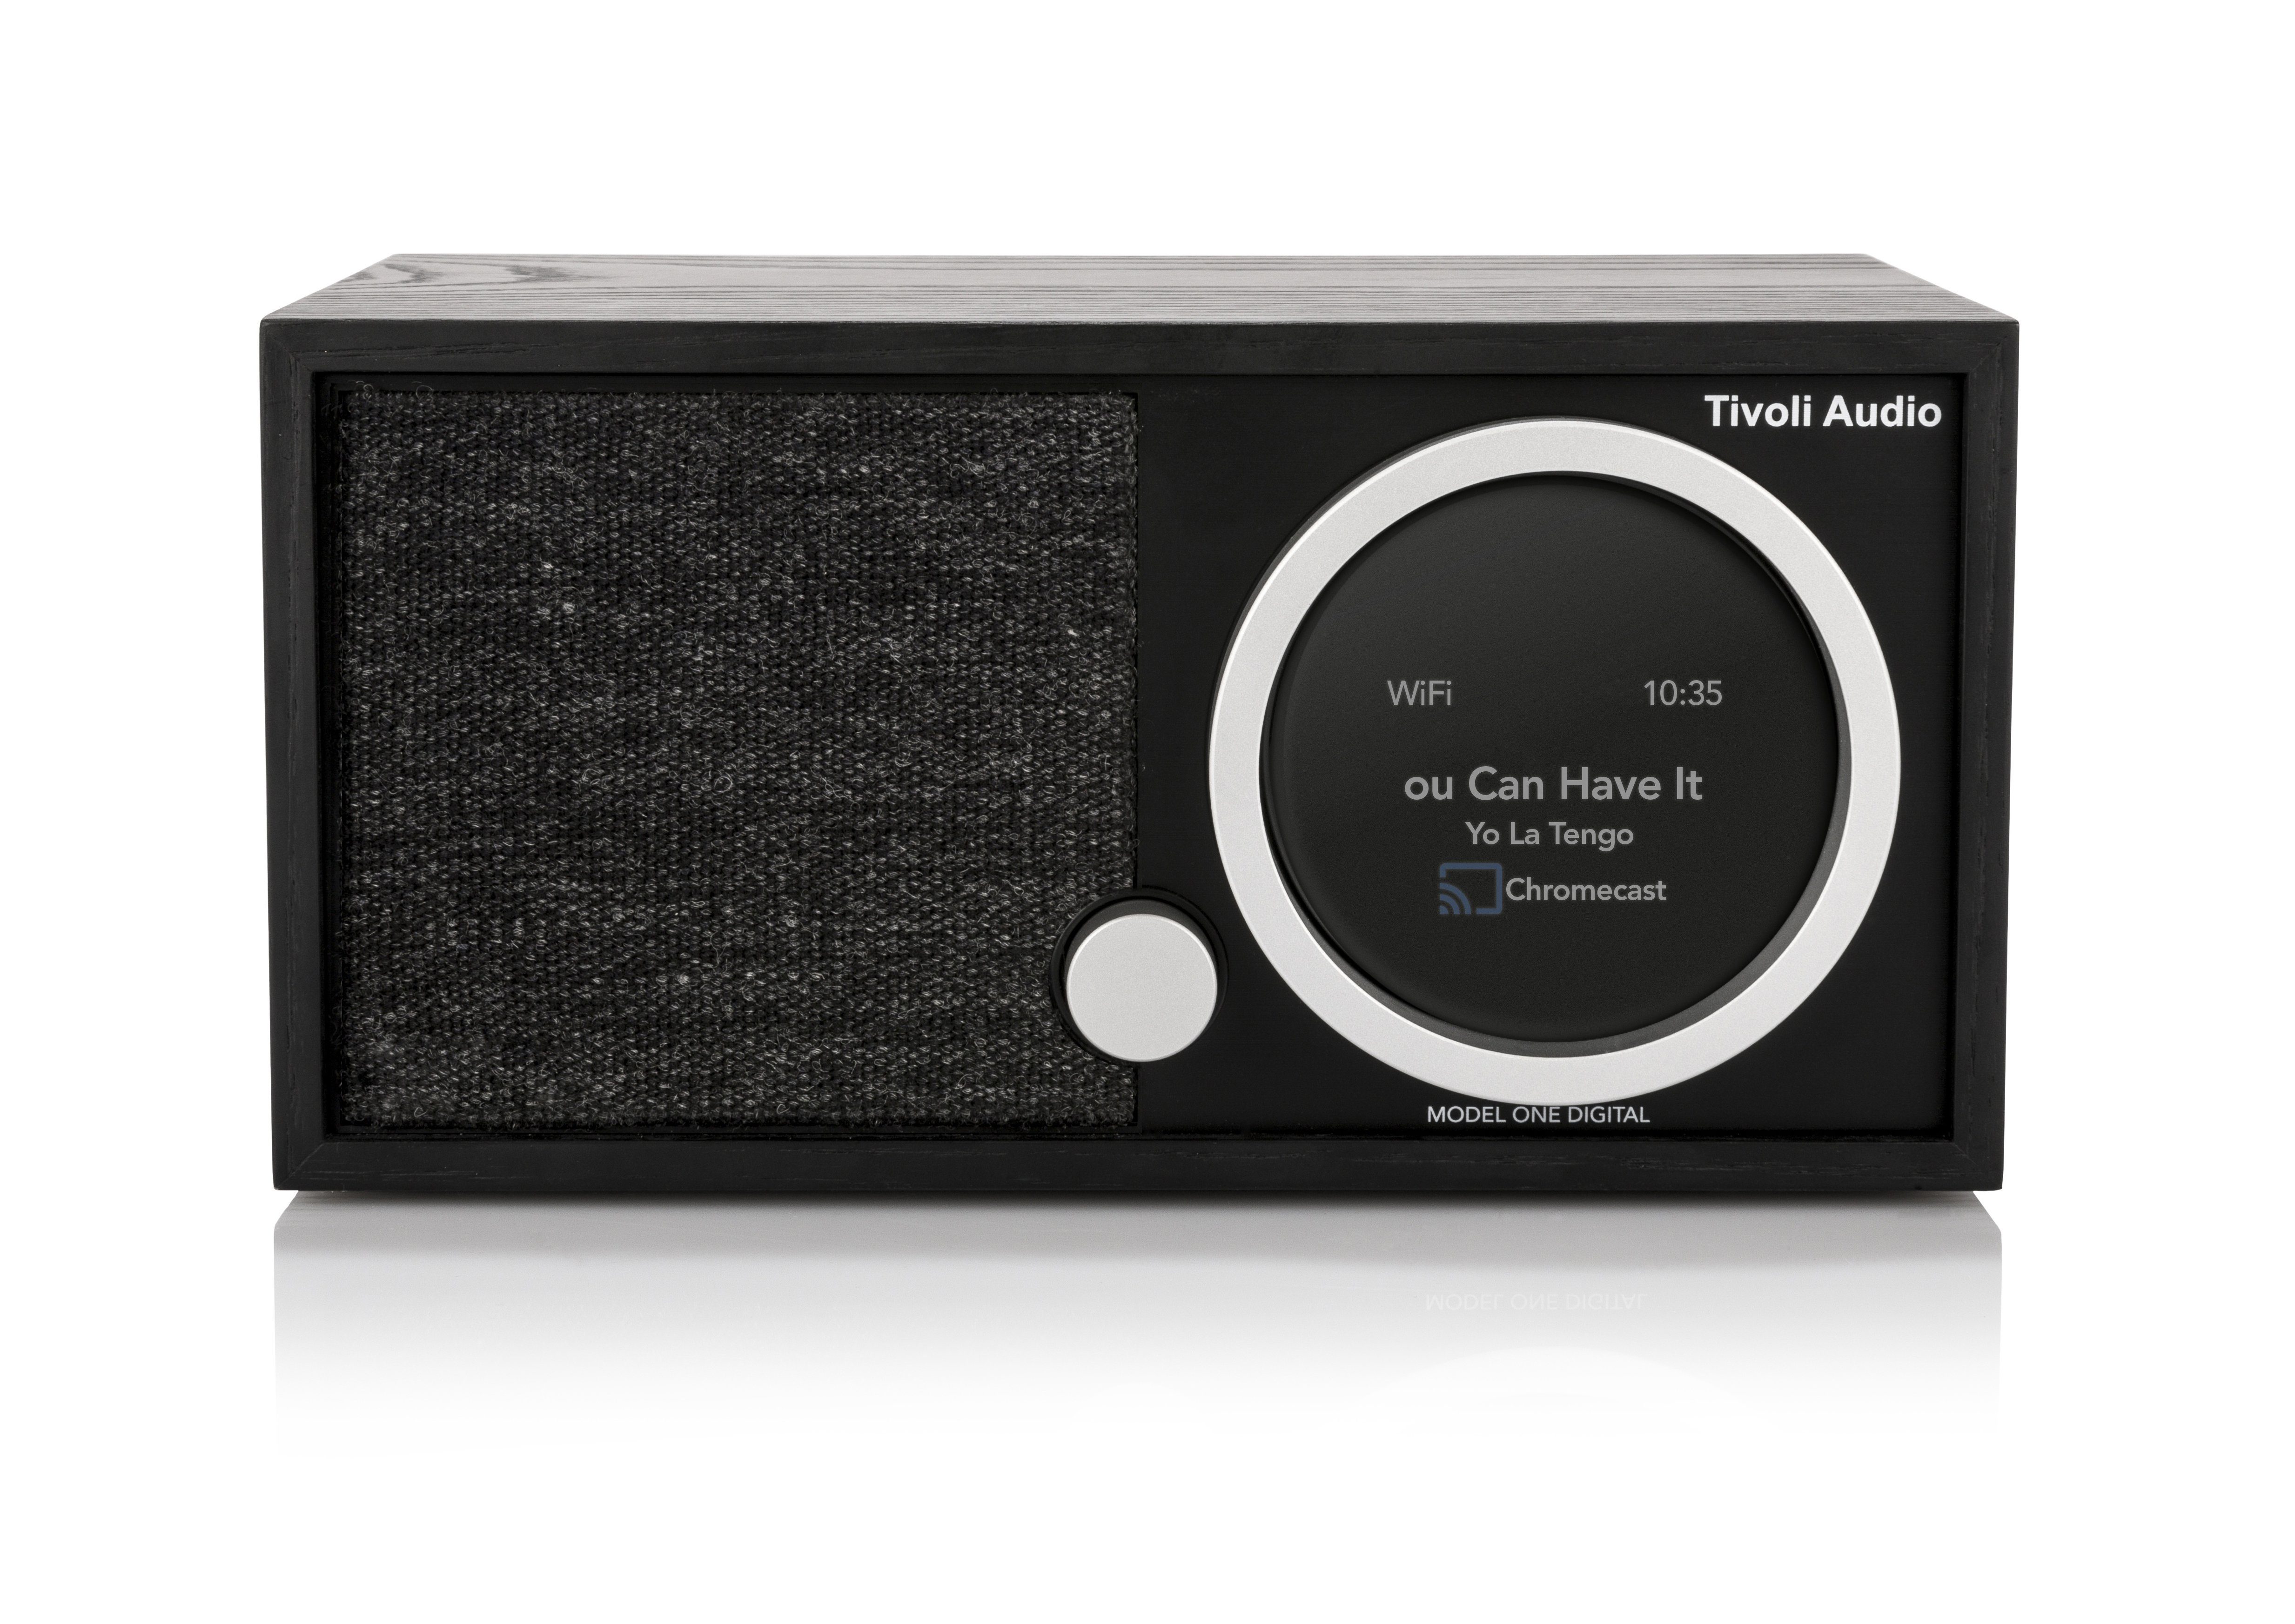 (Digitalradio (DAB), FM, Echtholz-Gehäuse) One Model Schwarz/Schwarz Tivoli Audio Digital+ Digitalradio Bluetooth-Lautsprecher, (DAB)